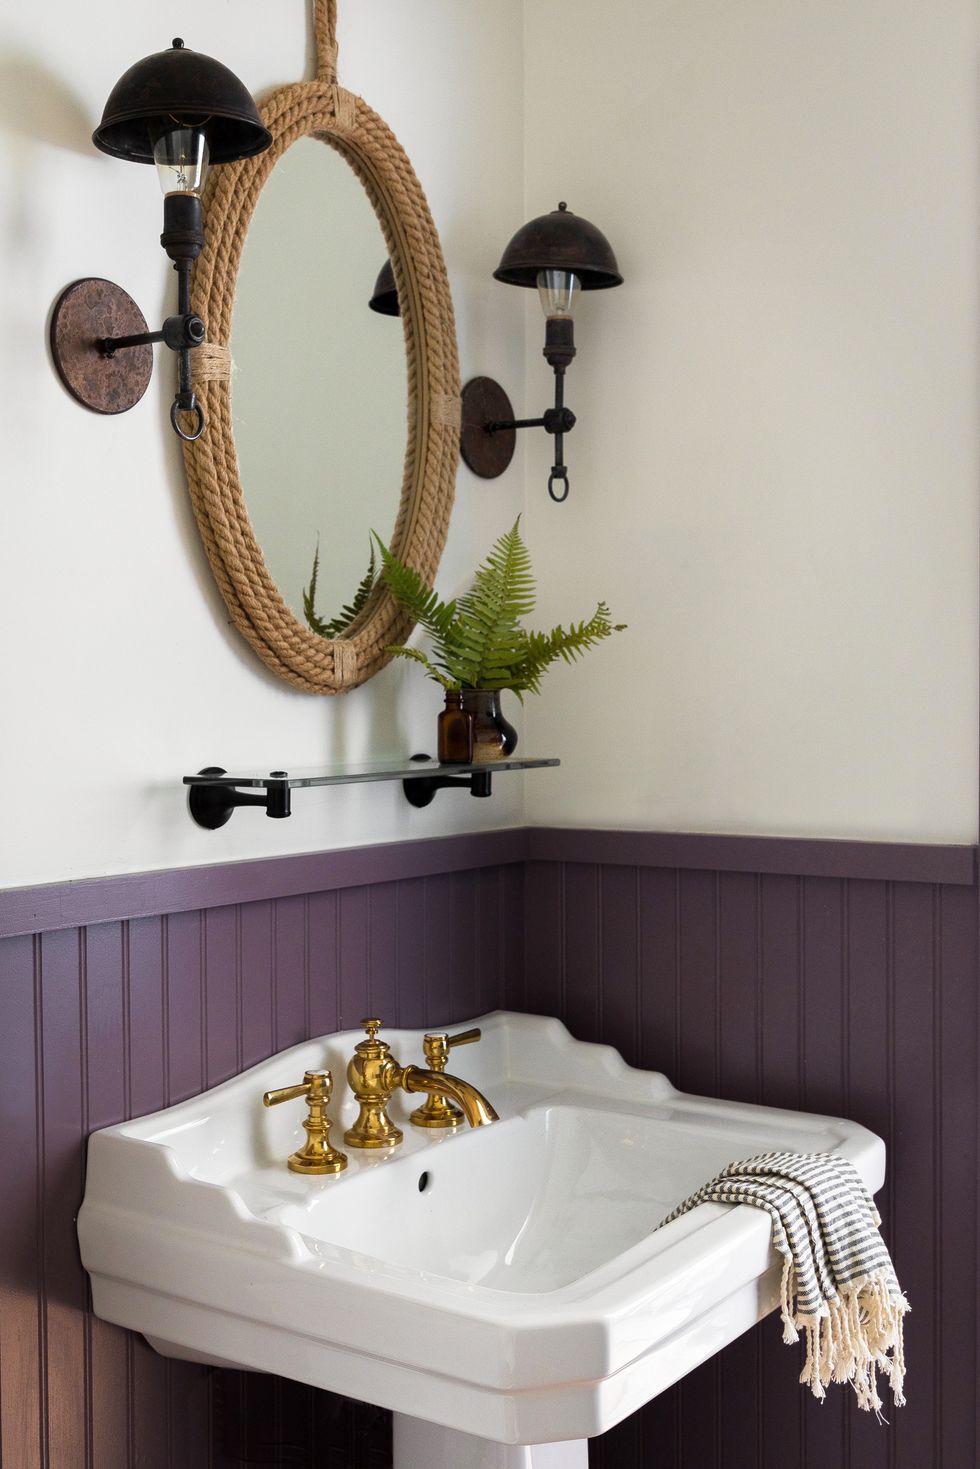 https://hips.hearstapps.com/hmg-prod/images/bathroom-shelf-ideas-heidi-caillier-design-seattle-interior-designer-guest-bathroom-the-cabin-and-the-snug-lavendar-walls-1612815531.jpg?crop=0.913xw:1.00xh;0.0578xw,0&resize=980:*